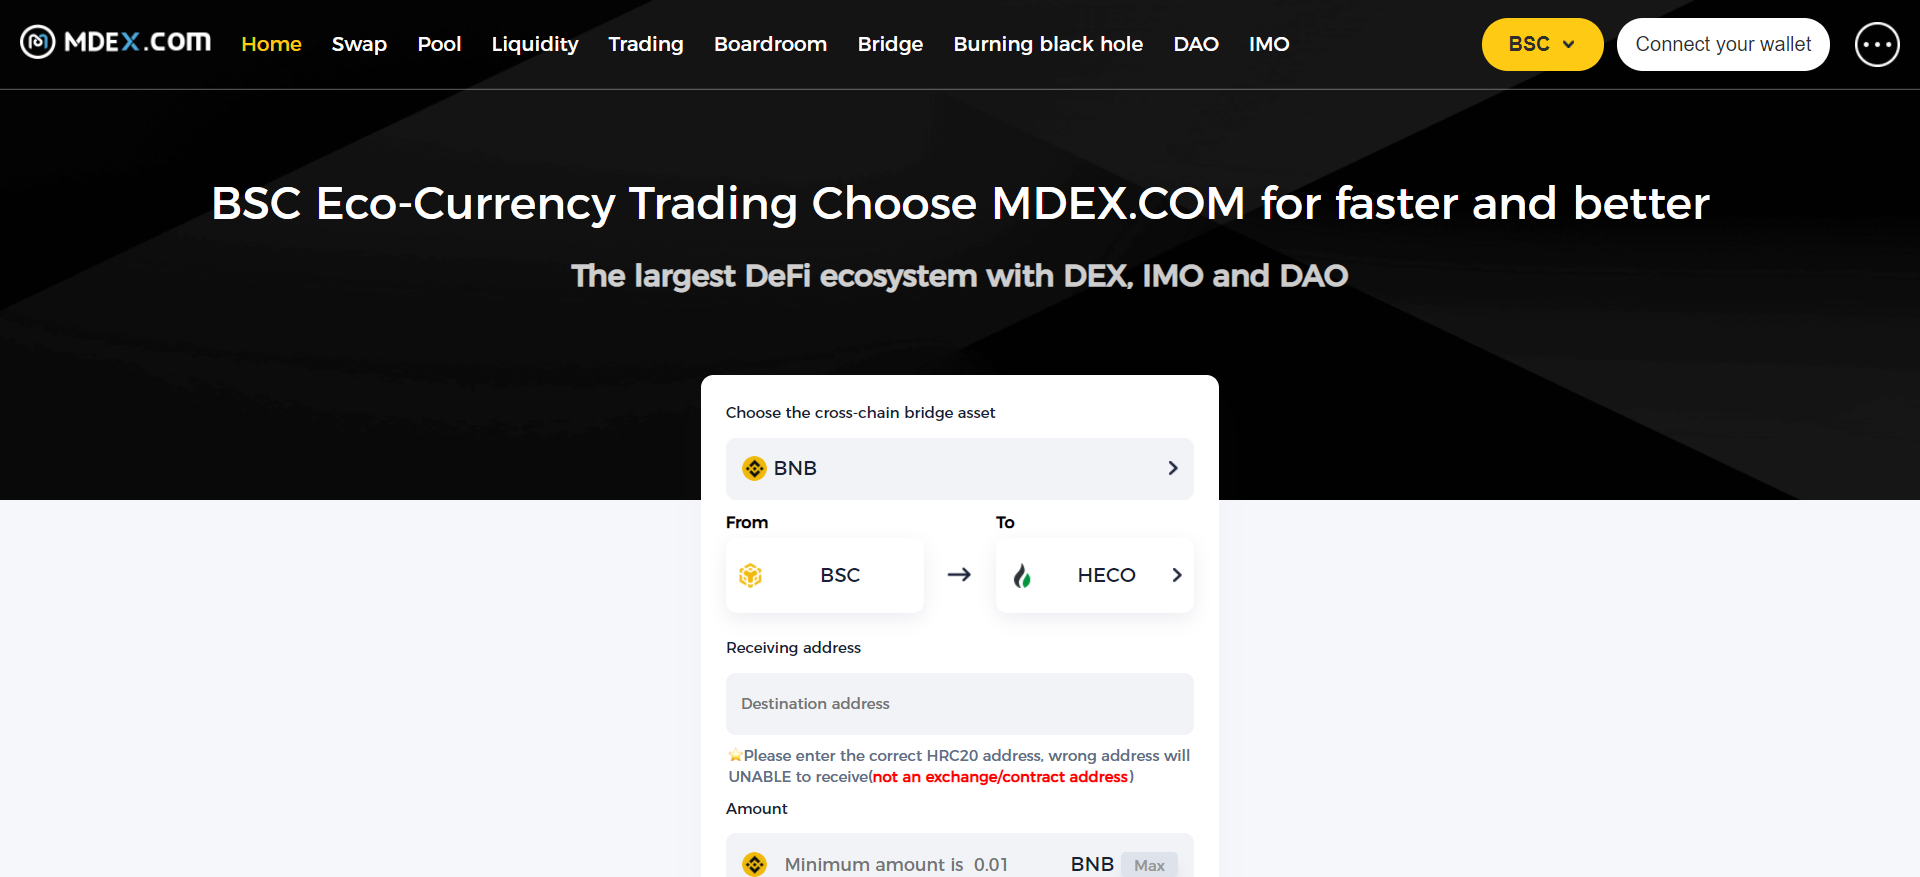 MDEX utilizes cross-chain bridge